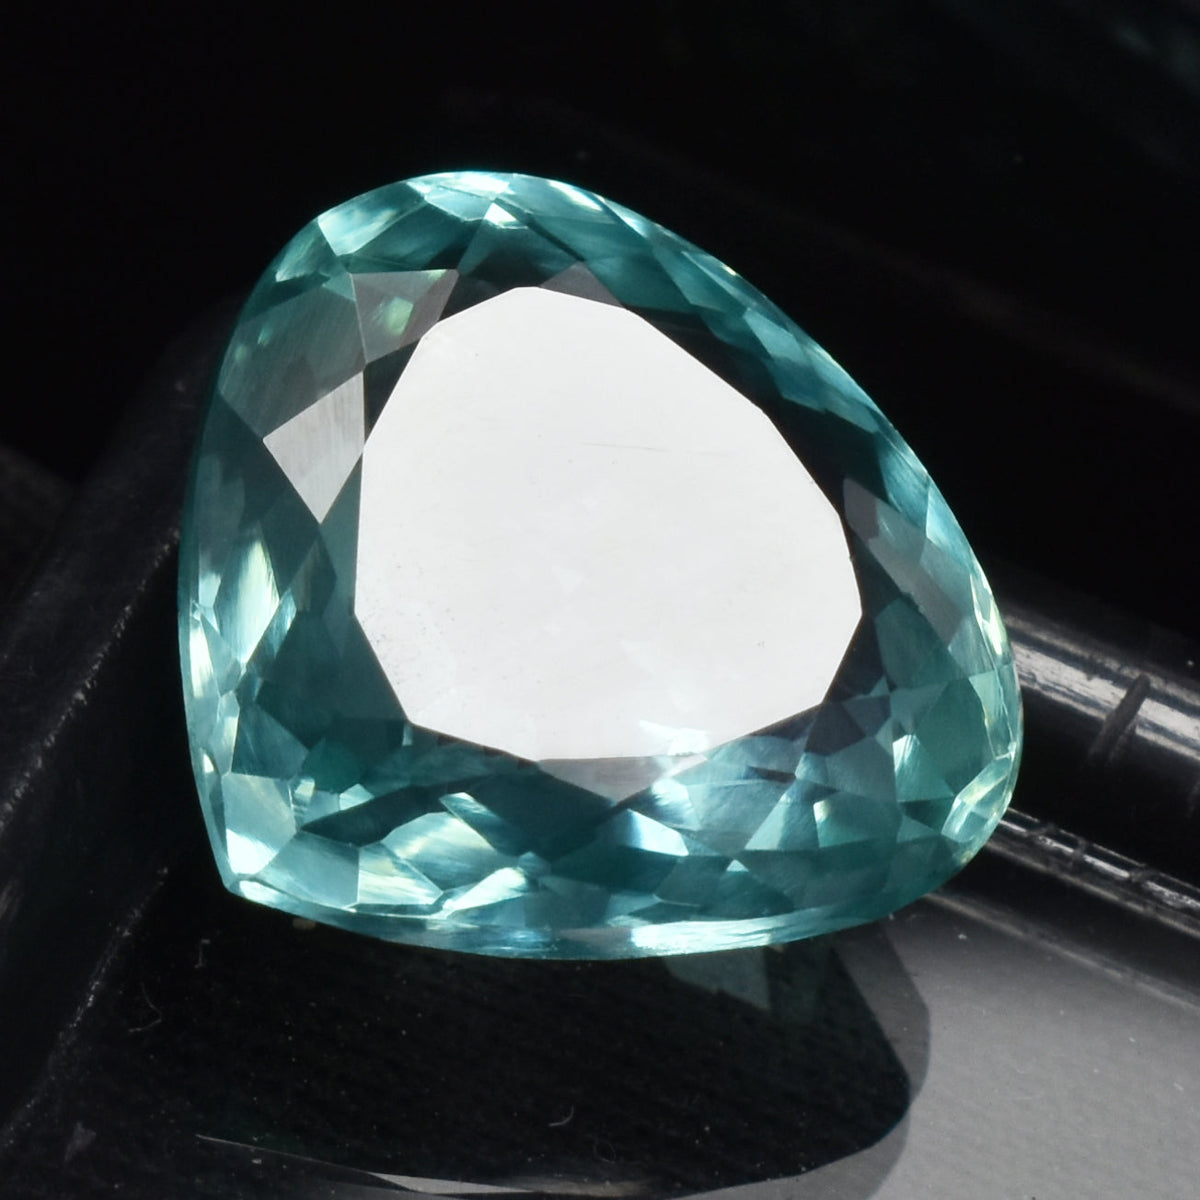 Beautiful Sapphire Gem From Sri-Lanka 10.45 Carat Montana Sapphire Pear Cut Natural Certified Loose Gemstone Jwelery Making Gem